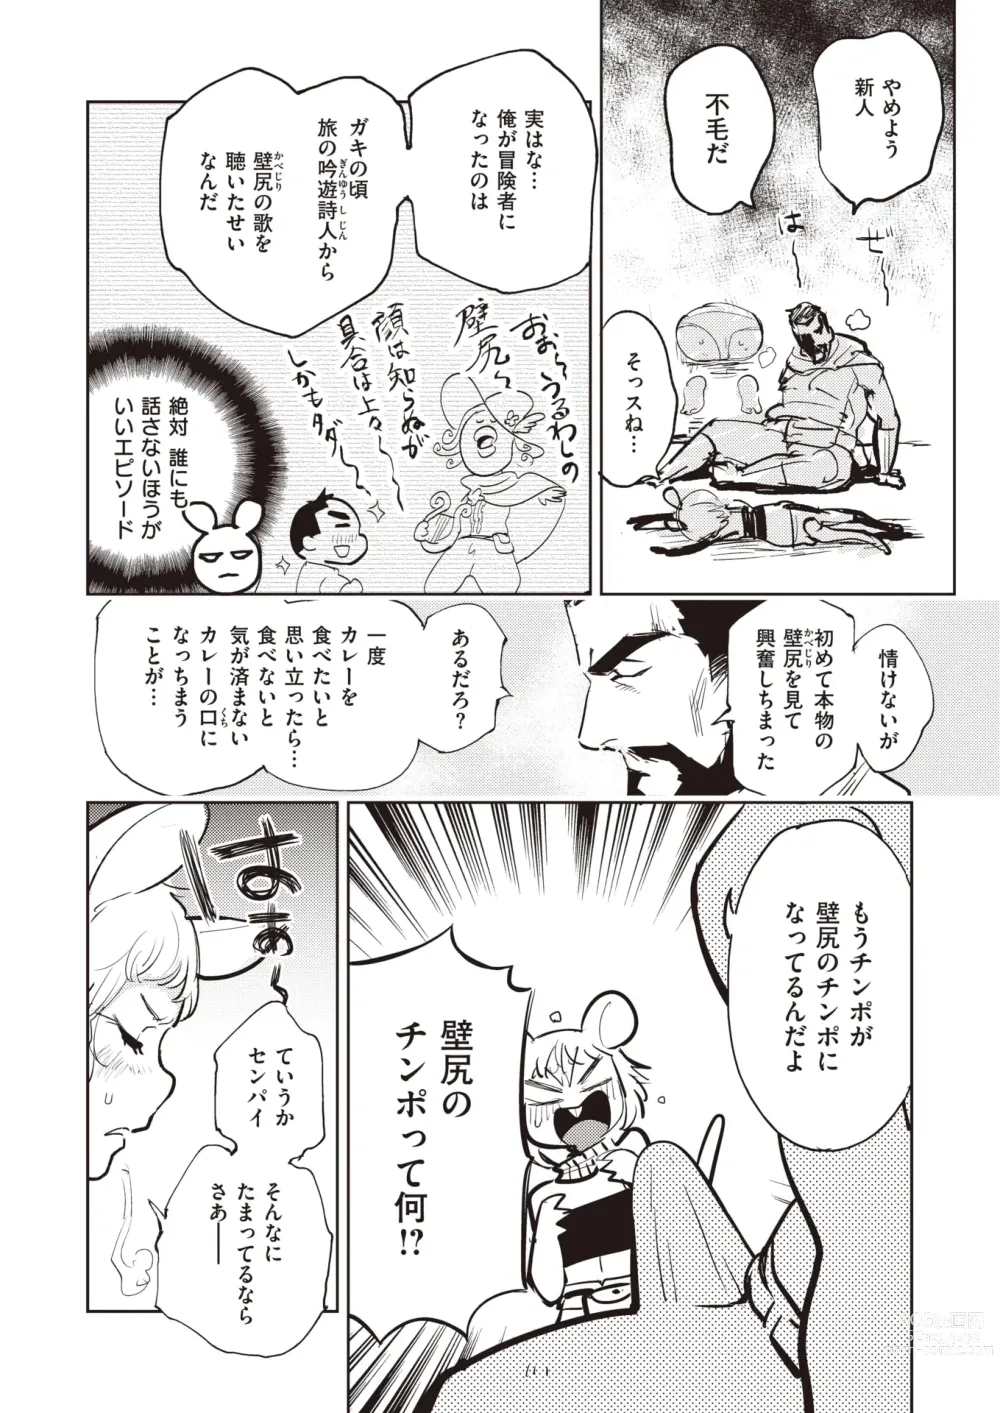 Page 45 of manga Isekai Rakuten Vol. 25